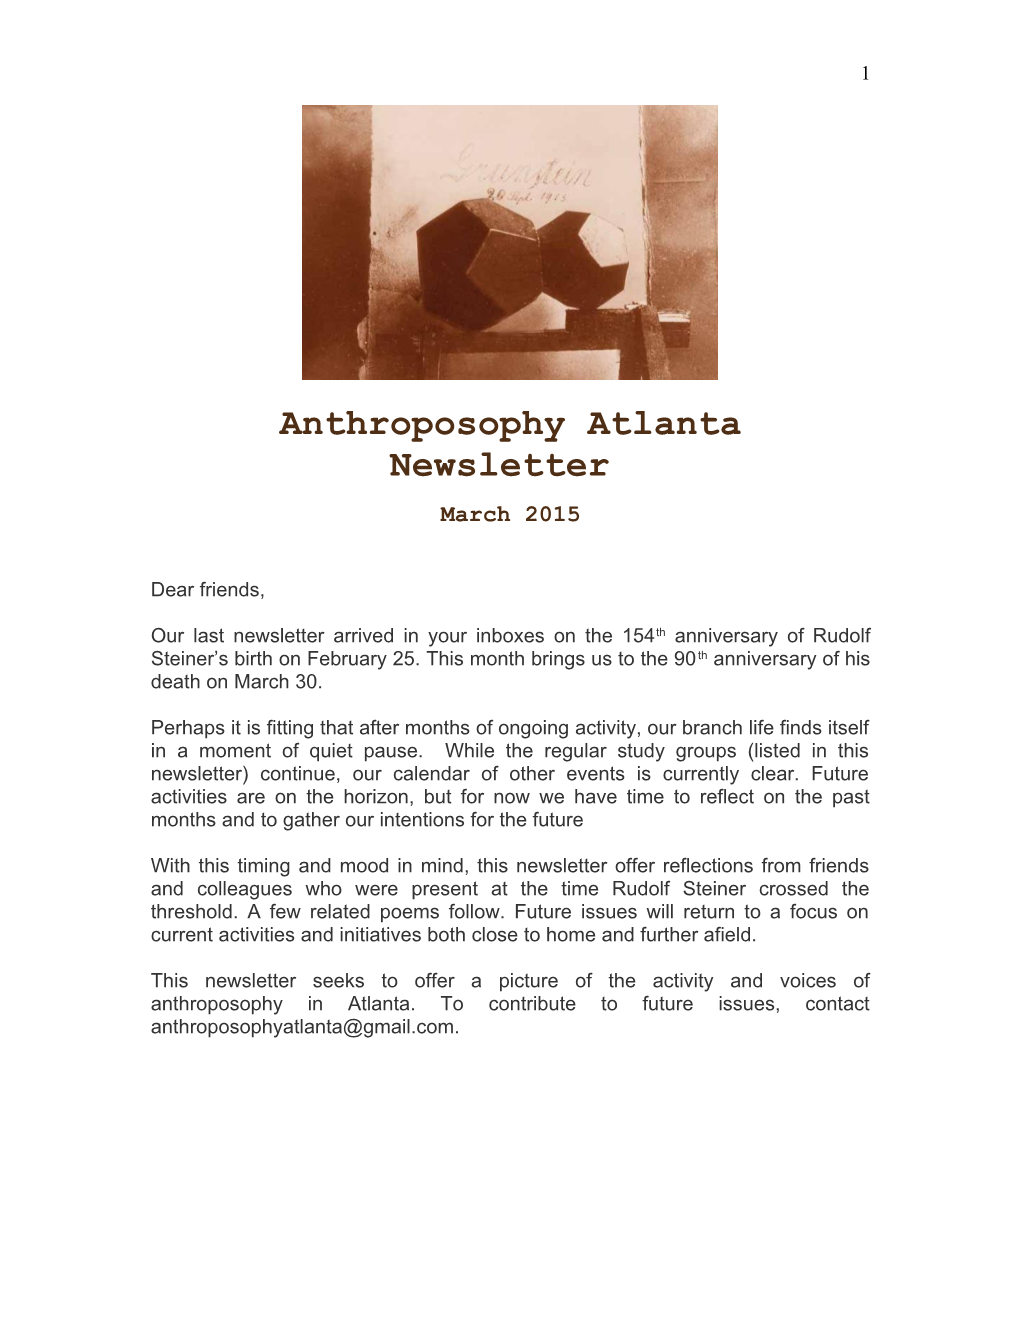 Anthroposophy Atlanta Newsletter March 2015